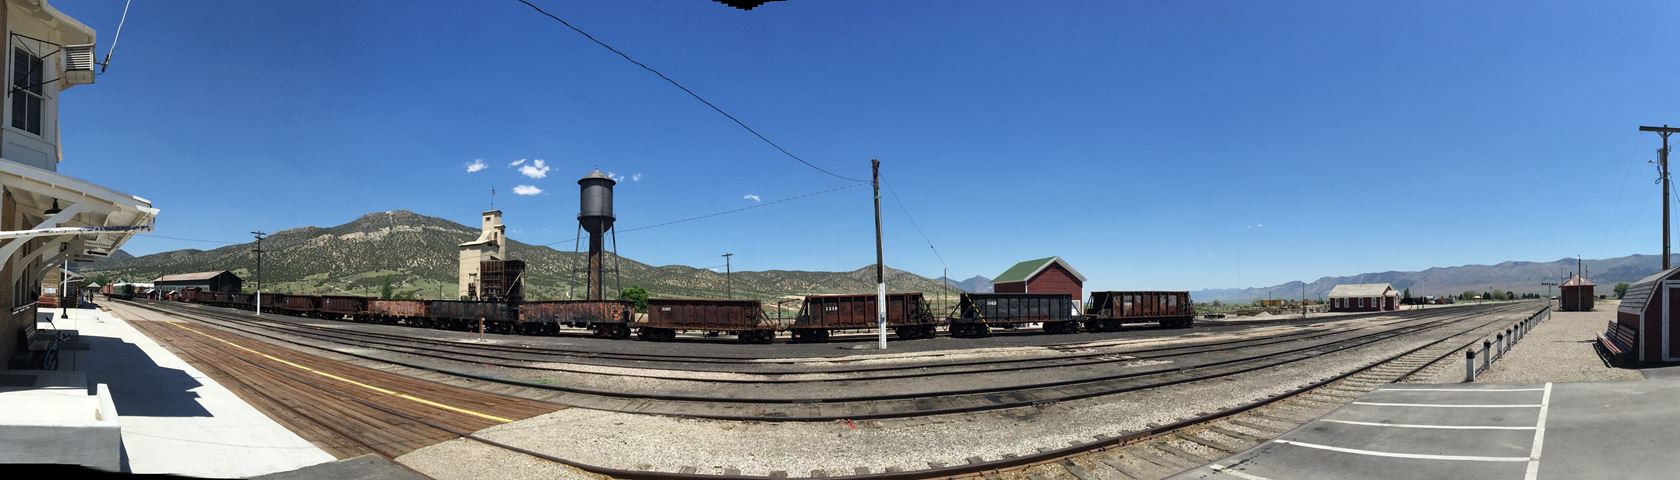 Nevada Northern Railway Museum, Train Yard